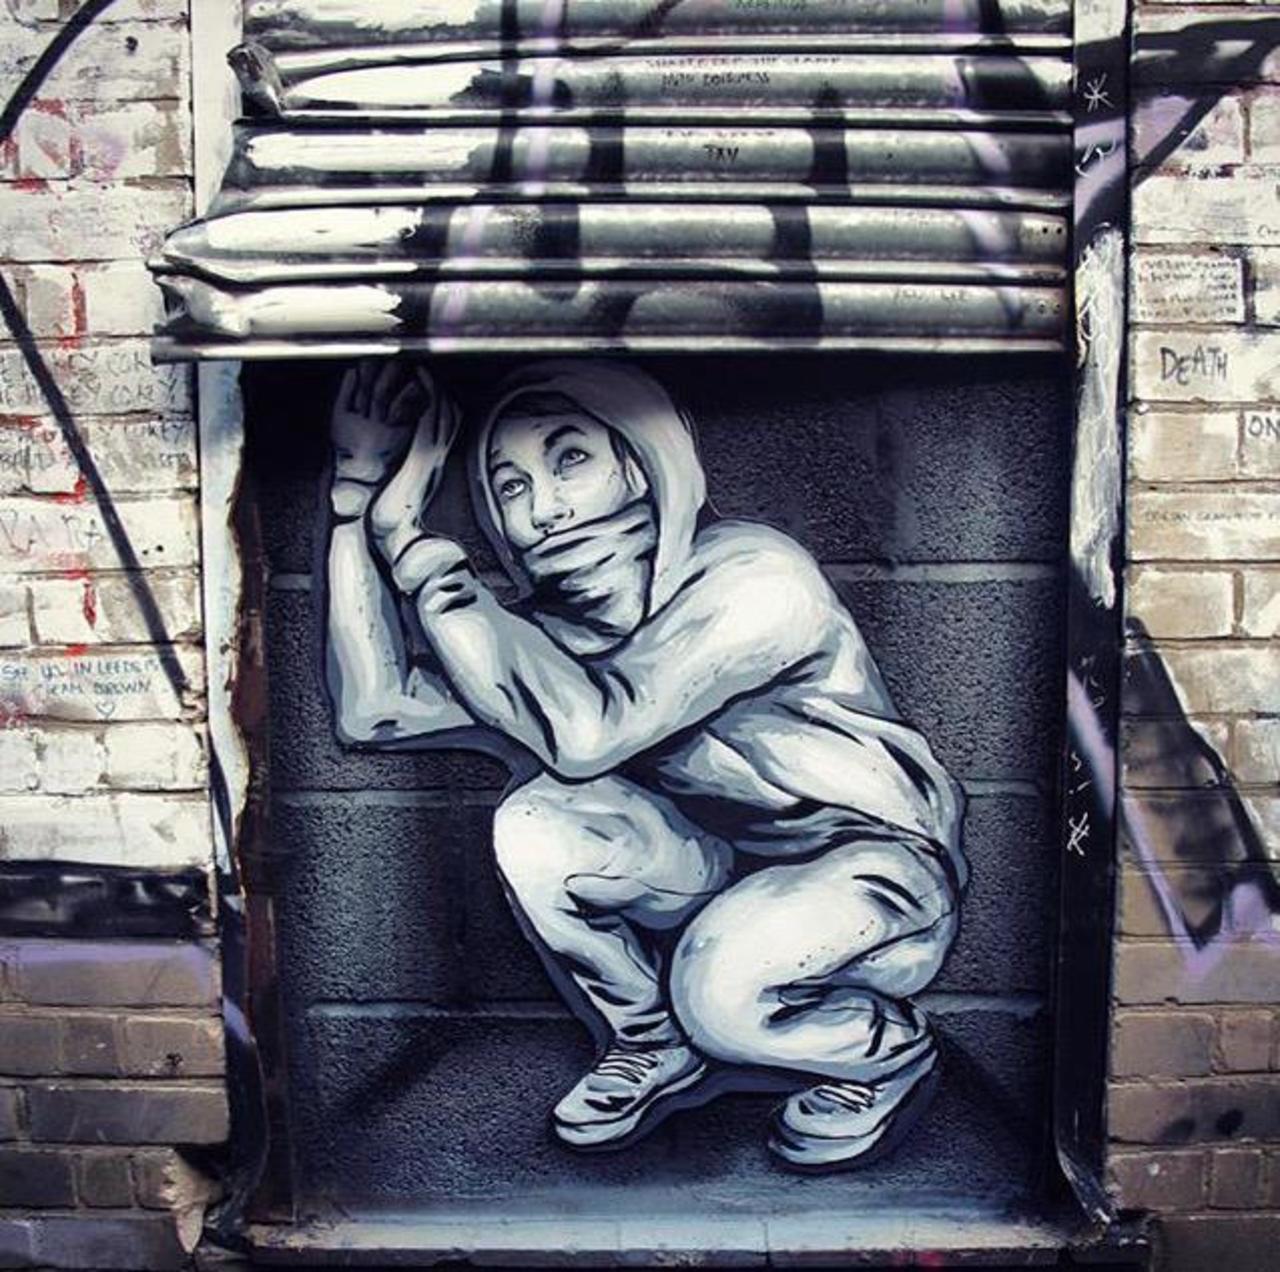 RT @GoogleStreetArt: Street Art by Zabou

#art #arte #graffiti #streetart http://t.co/9j9cOB6ruu